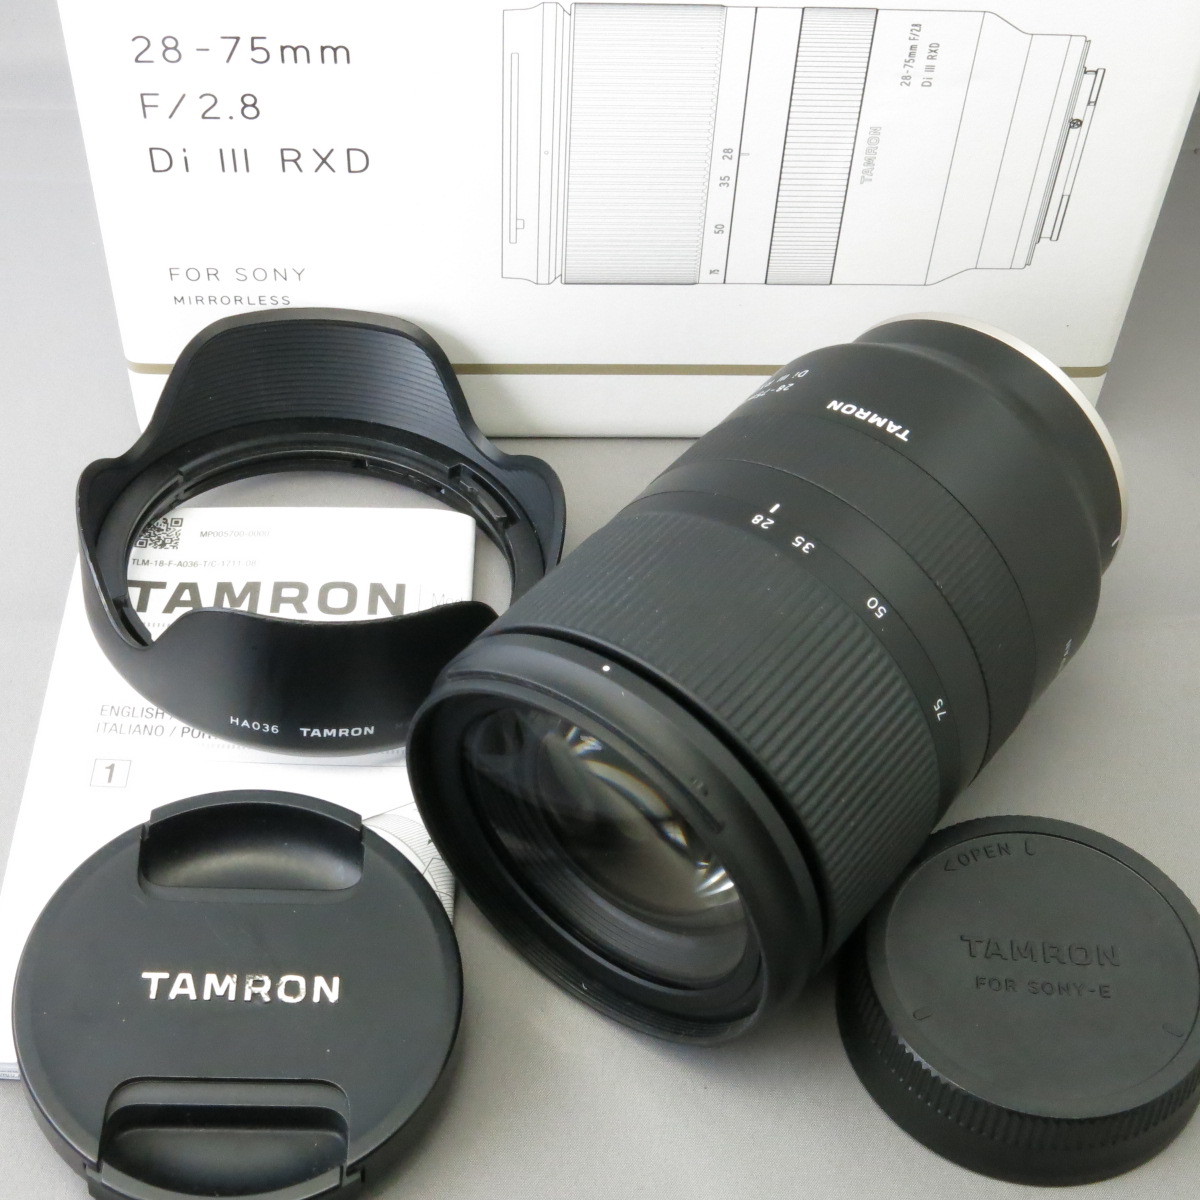 TAMRONタムロン28-75mm F2.8Di III A036 ソニー用